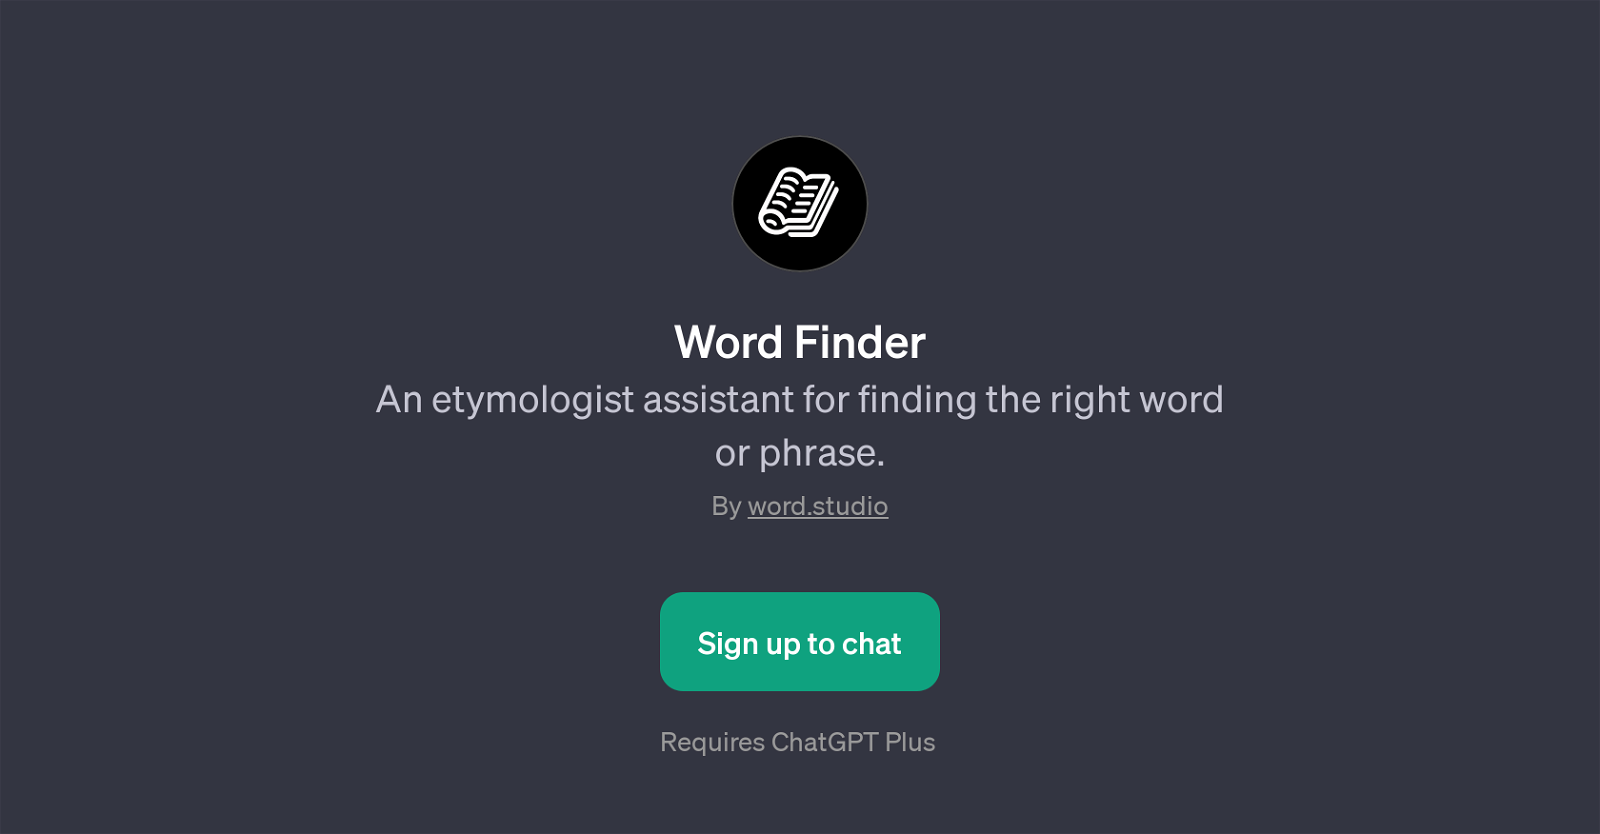 Word Finder website